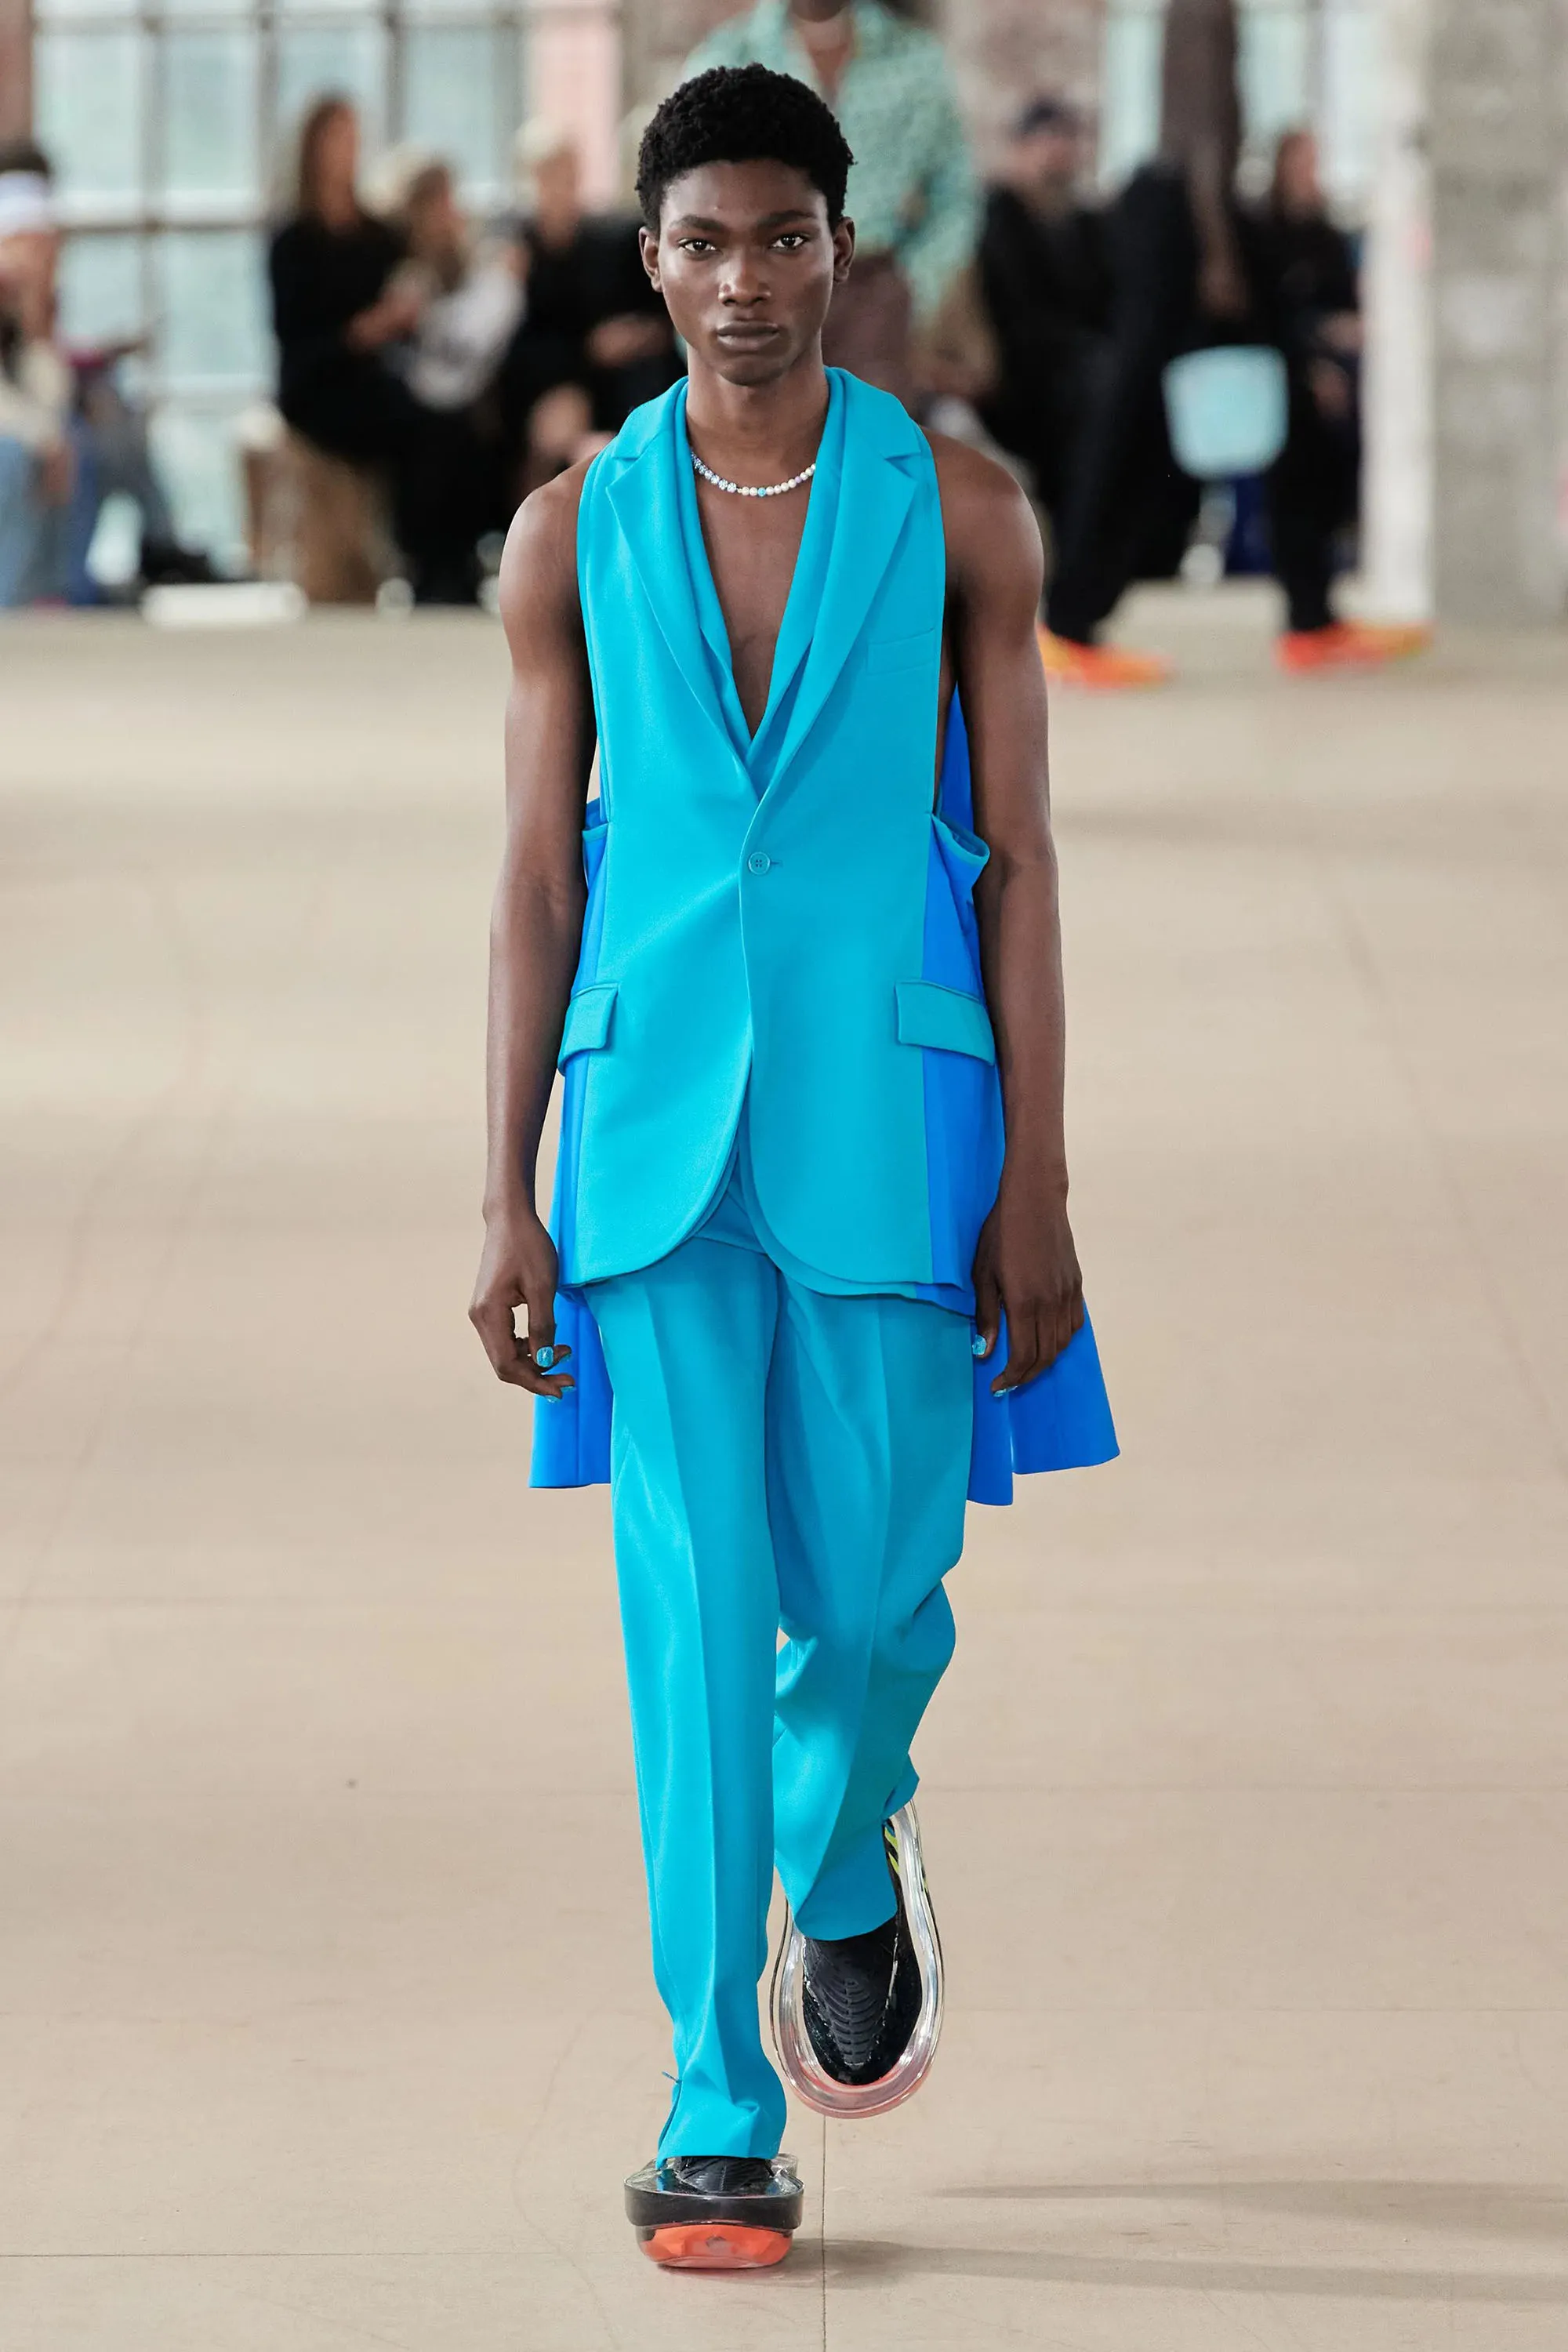 Could modular fashion make sustainability fun? #539 – Paris Good Fashion